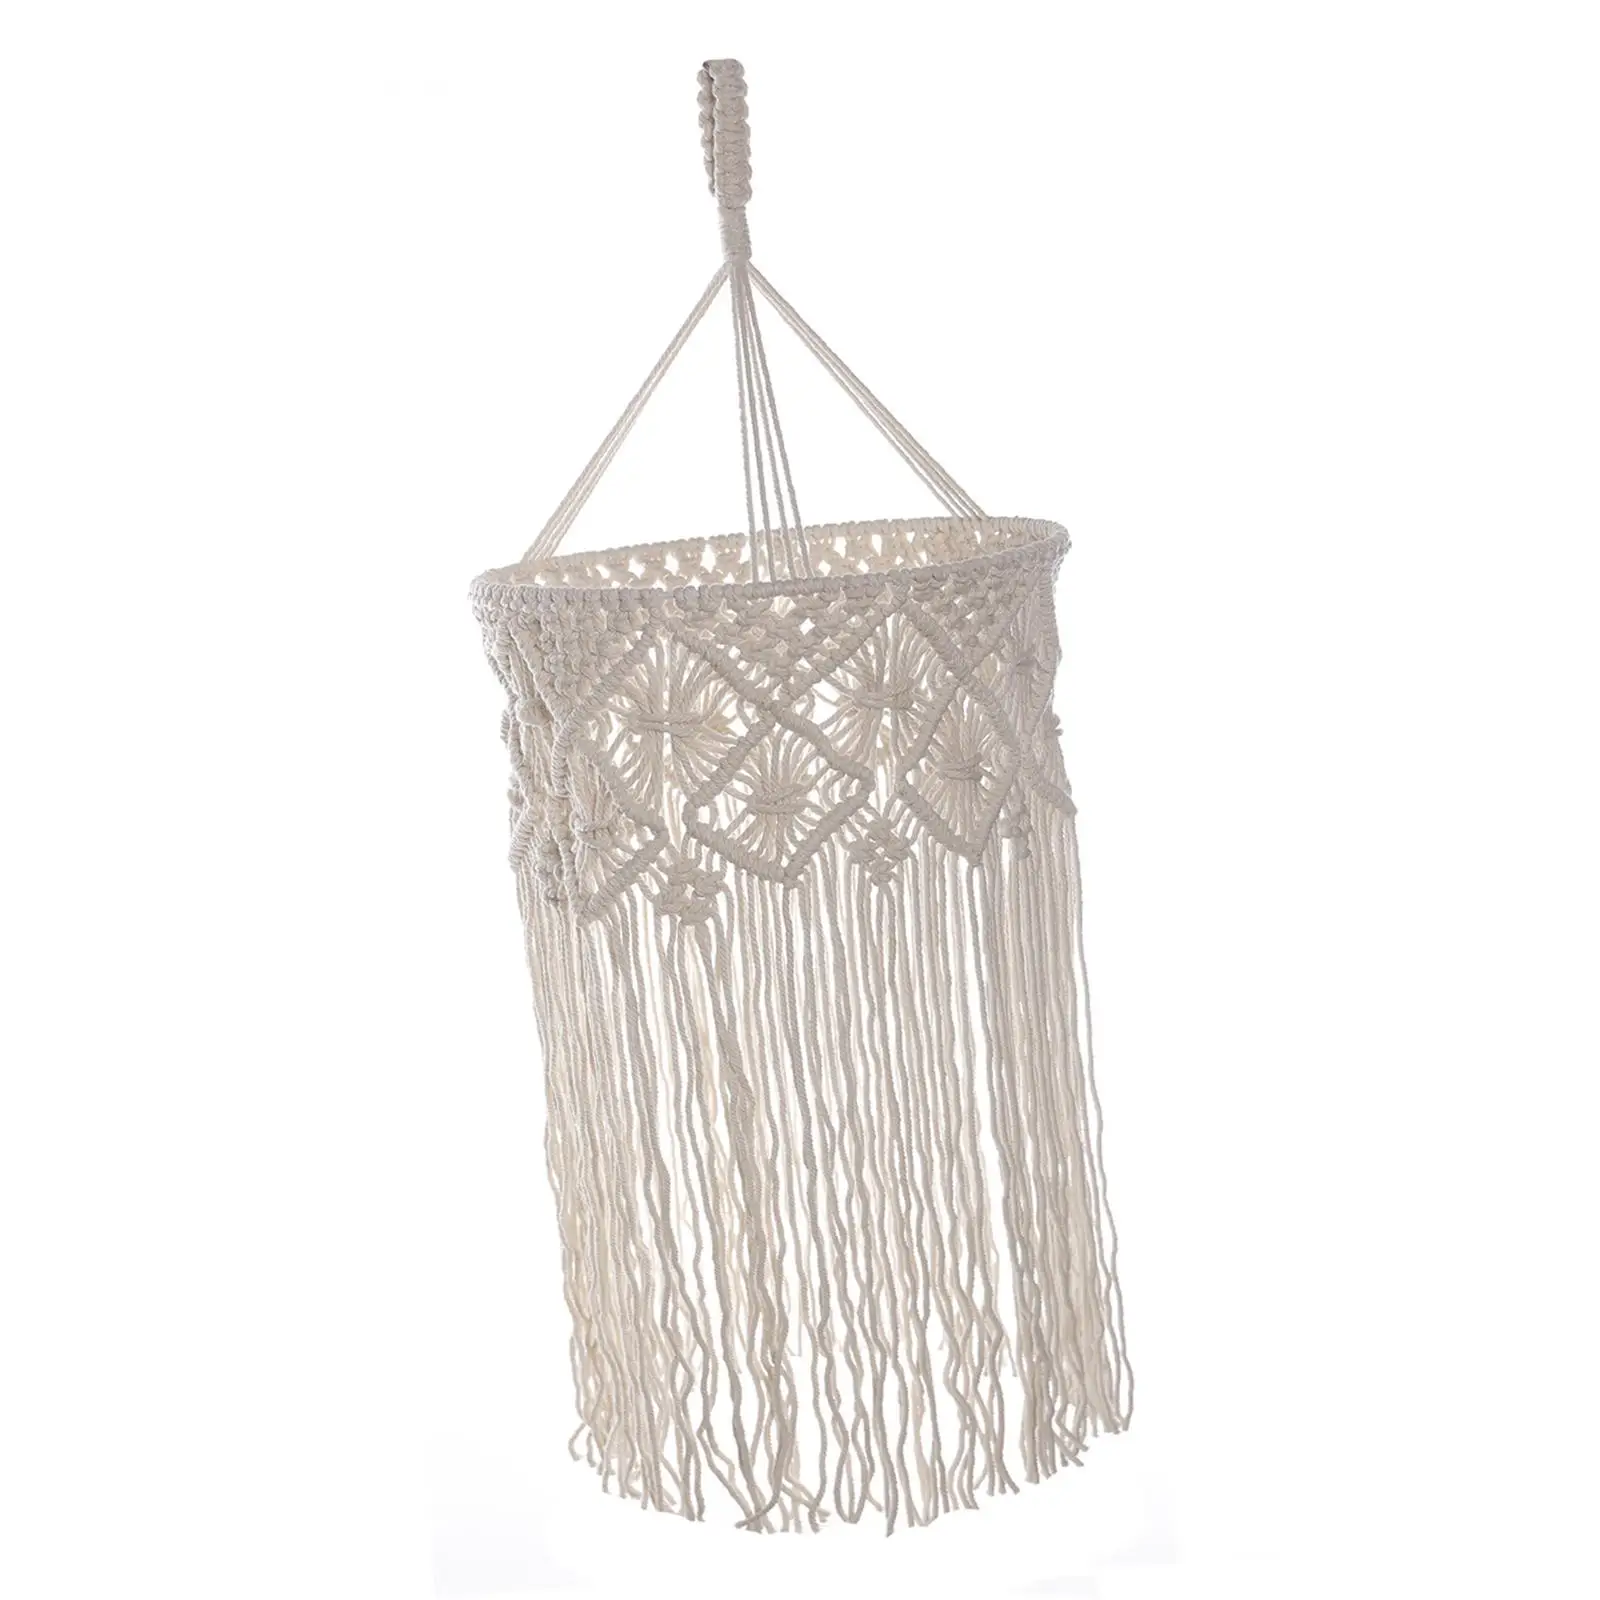 Hand Knitted Light Shade Macrame Lamp Shade Dustproof Accessories Bohemian